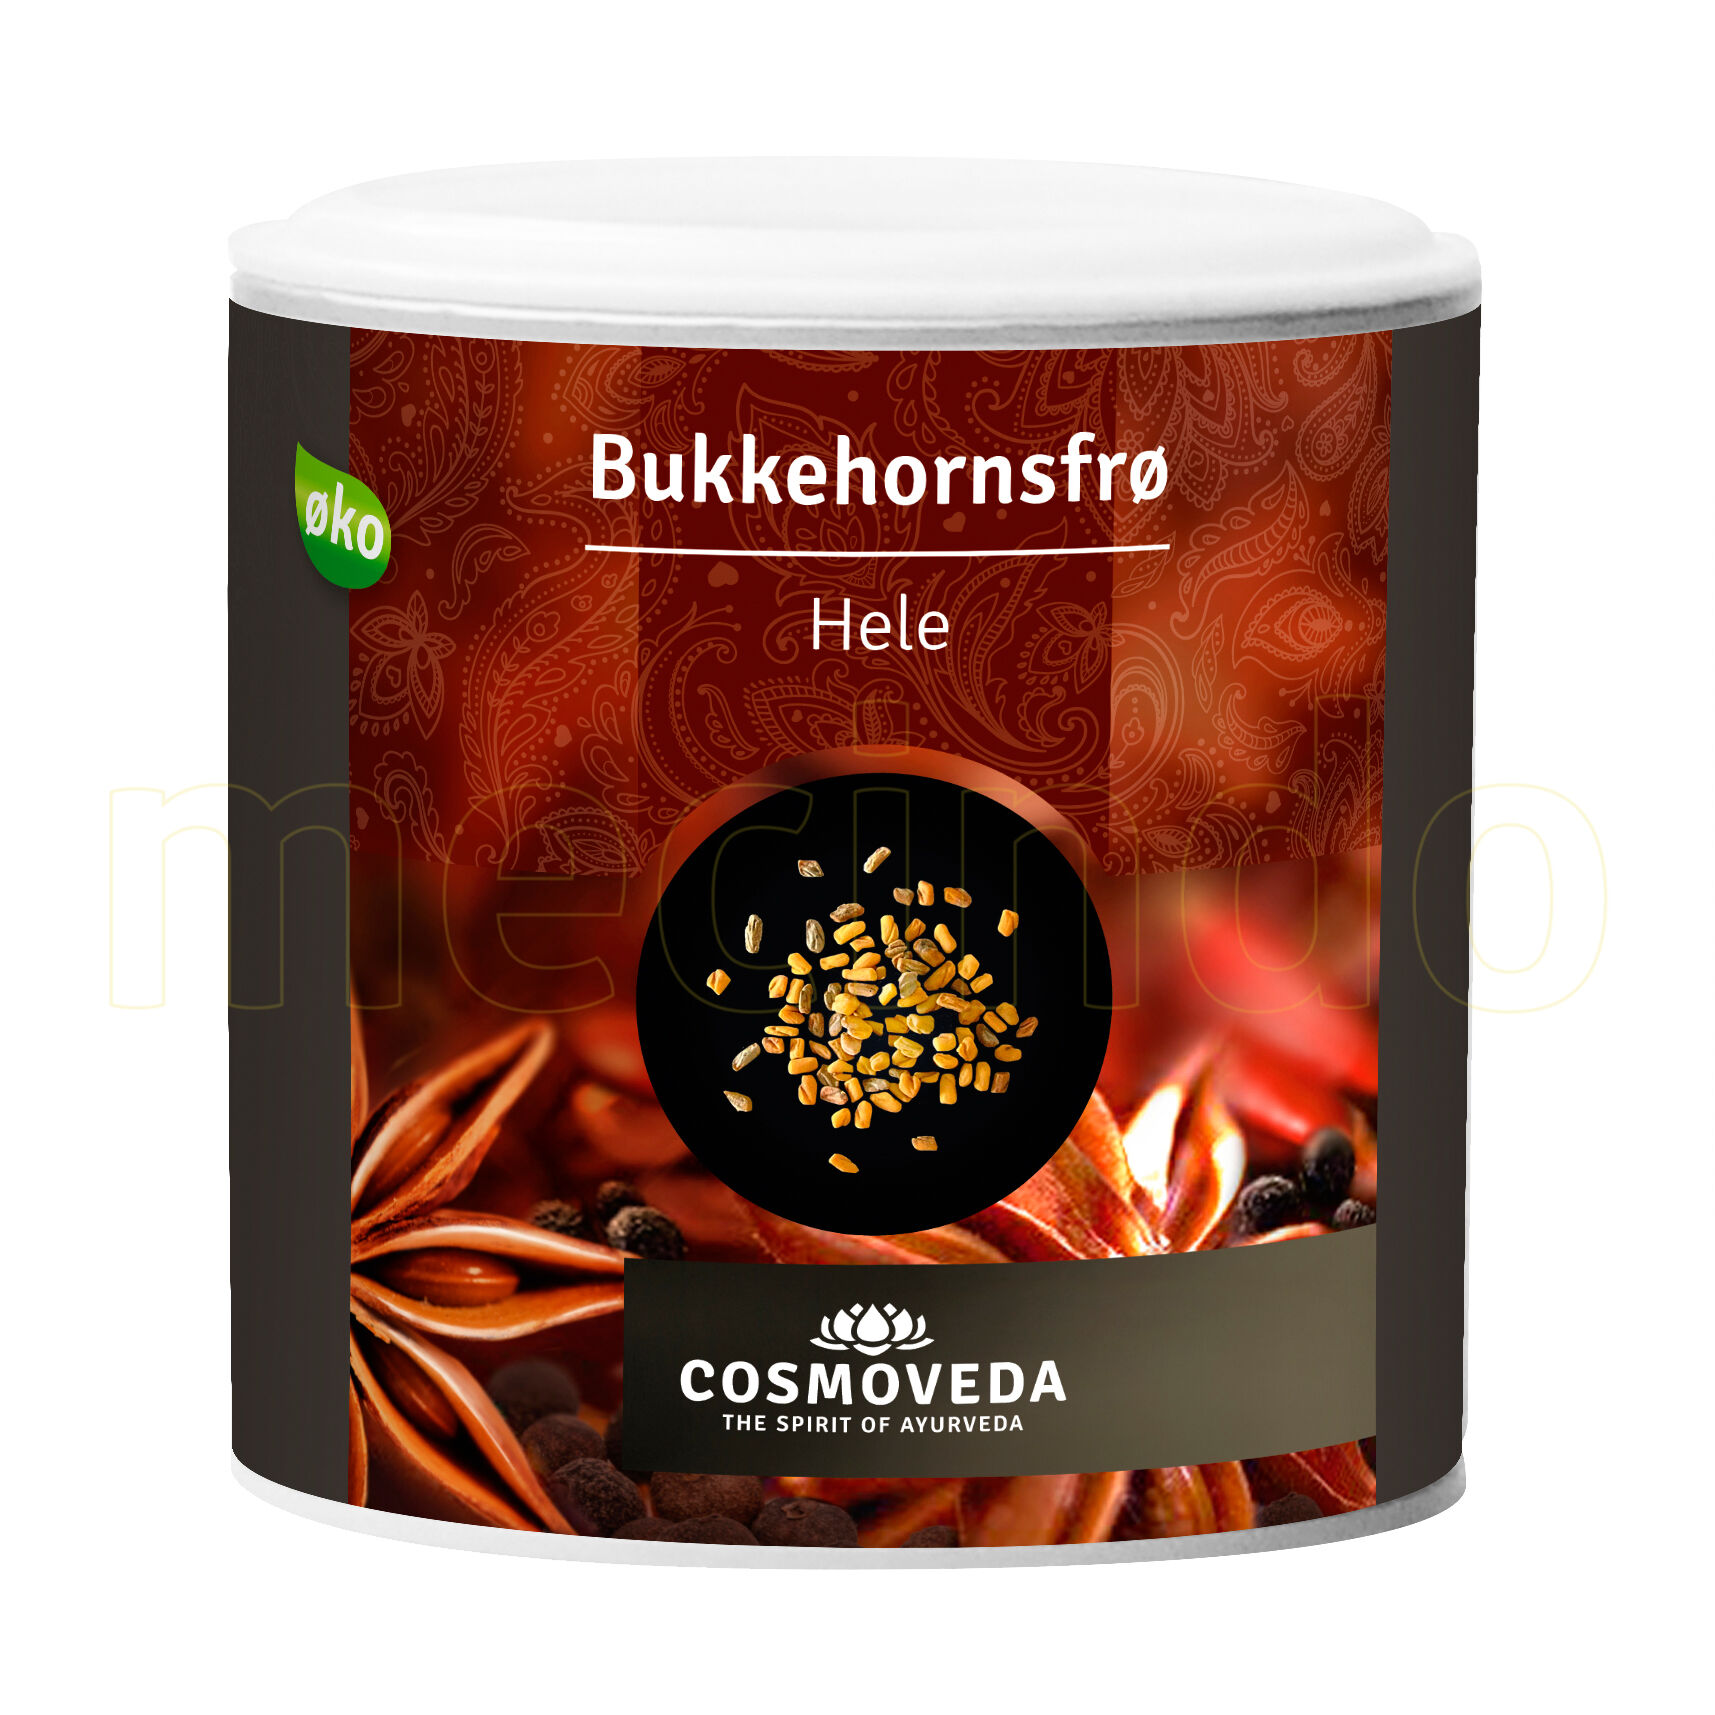 Cosmoveda Bukkehornsfrø Hele Ø - 130 g